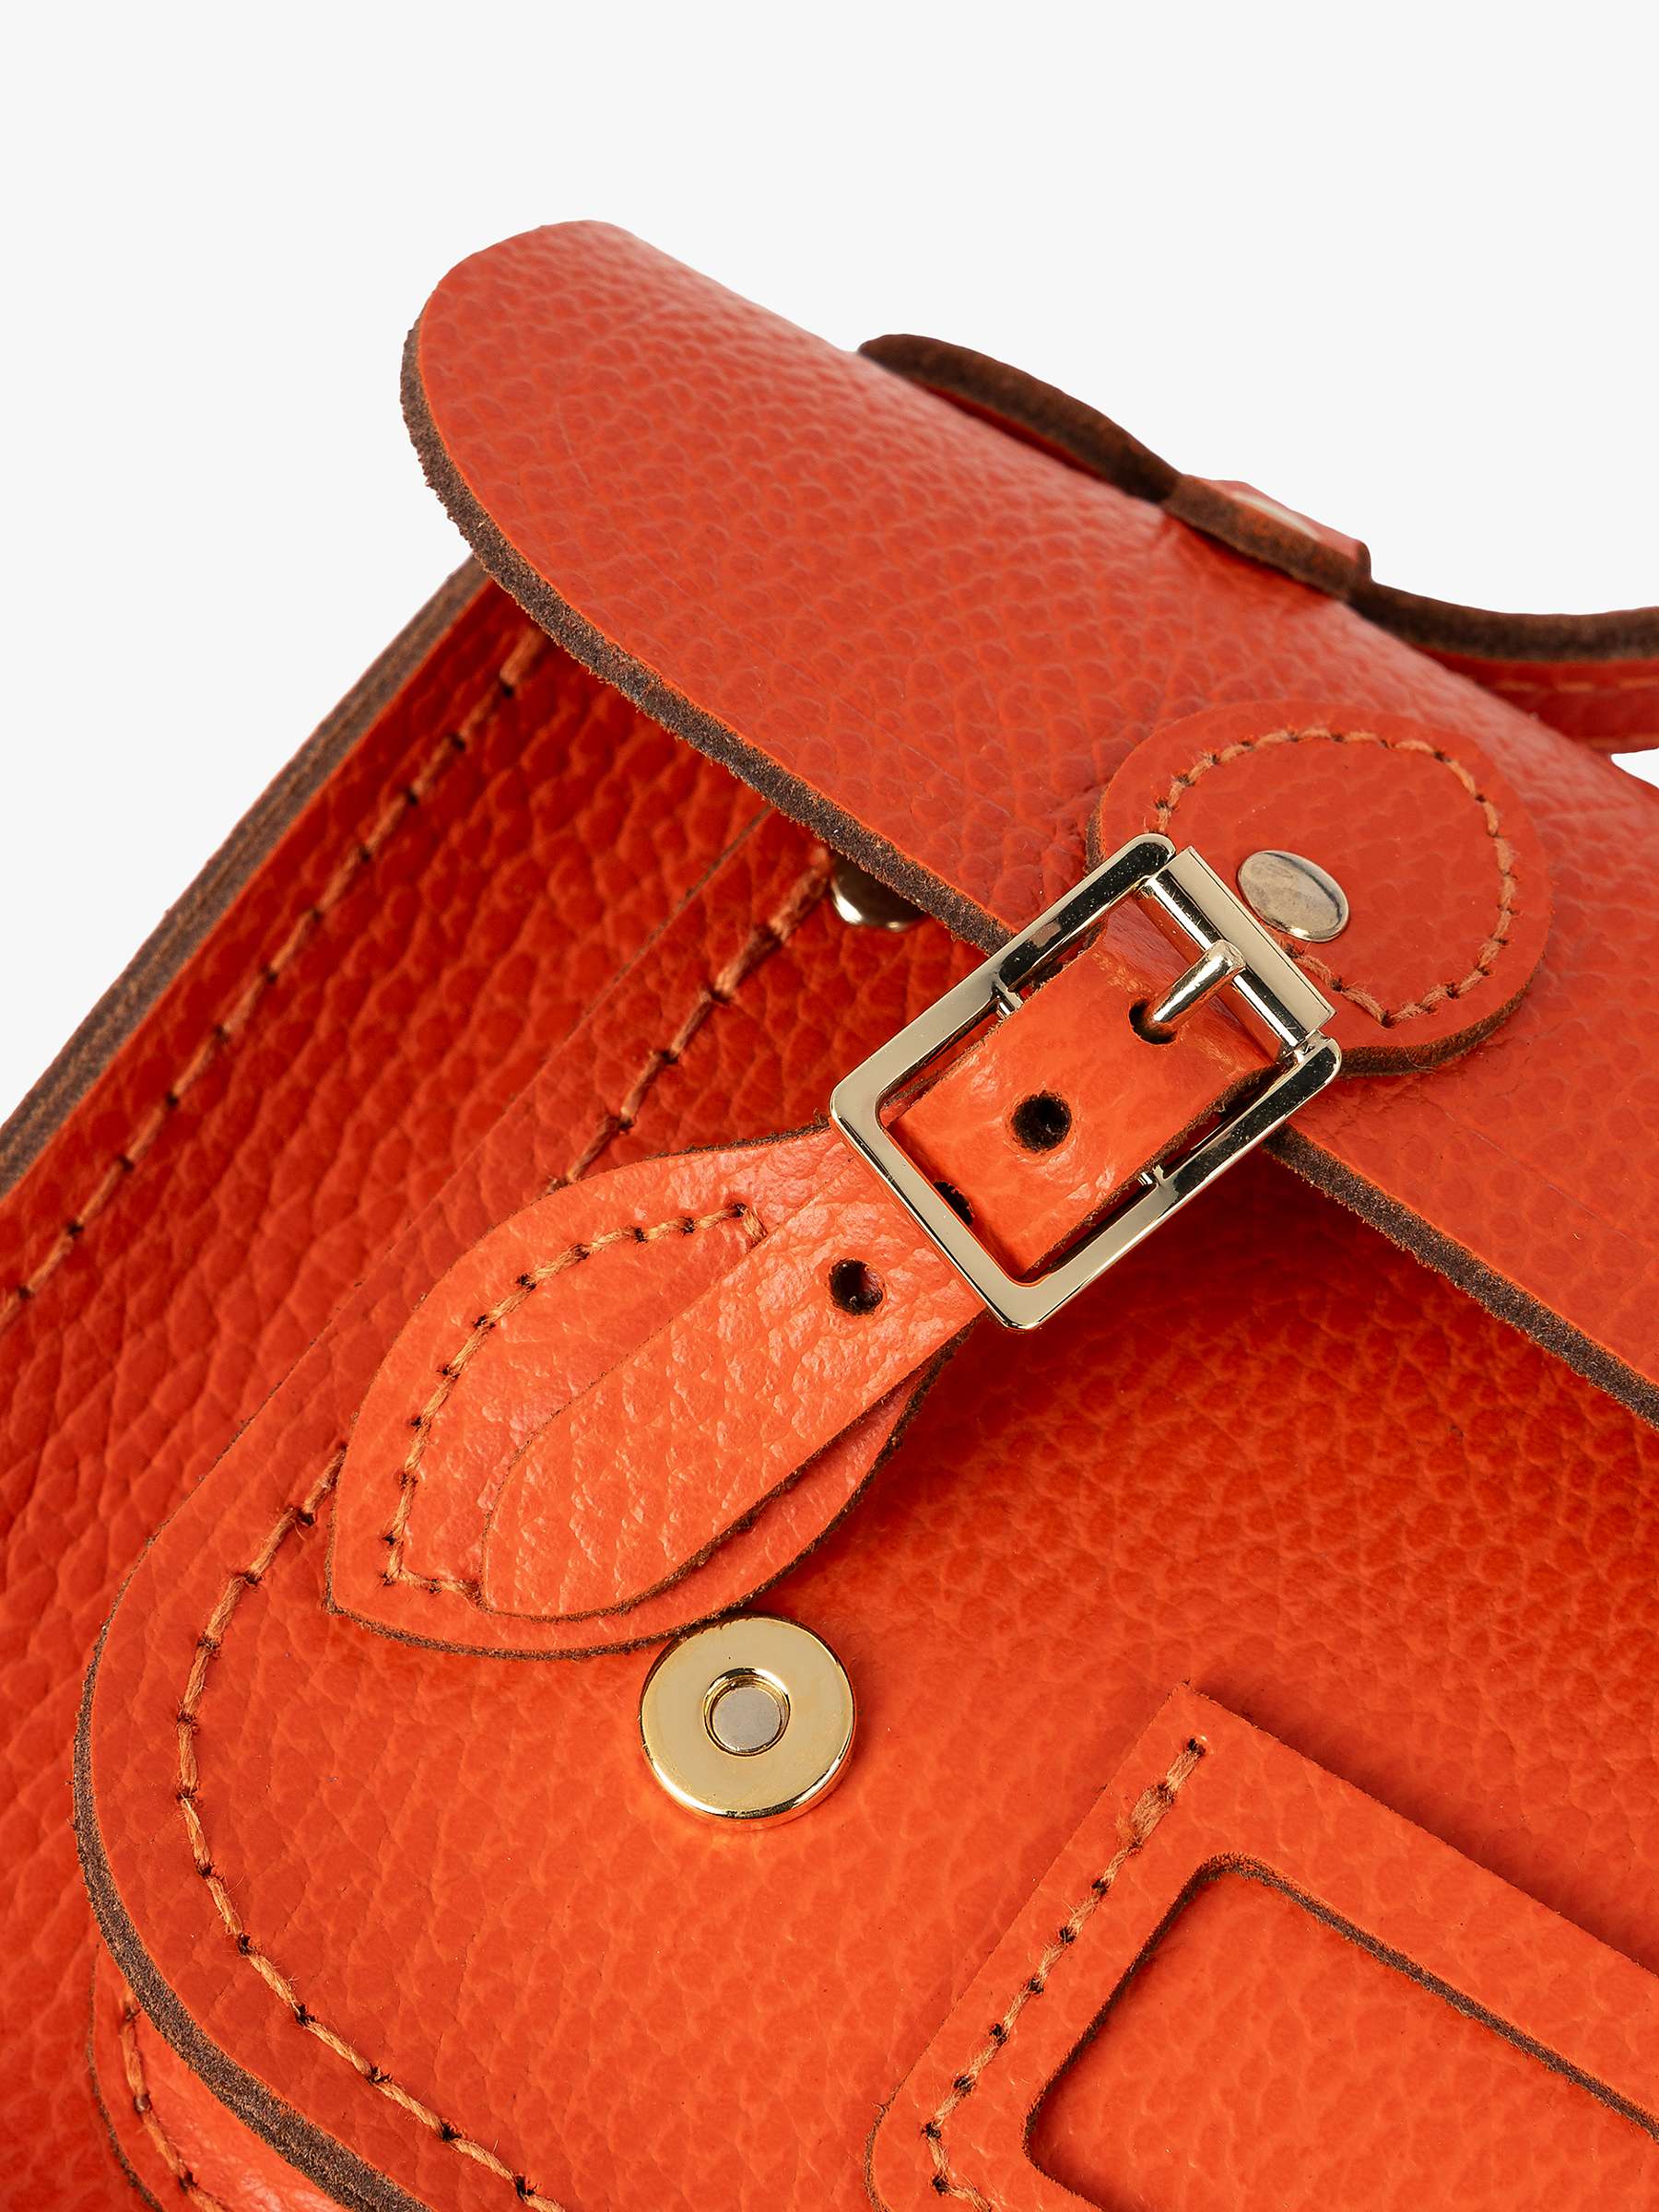 Buy Cambridge Satchel The Mini Leather Satchel, Orangeade Celtic Grain Online at johnlewis.com